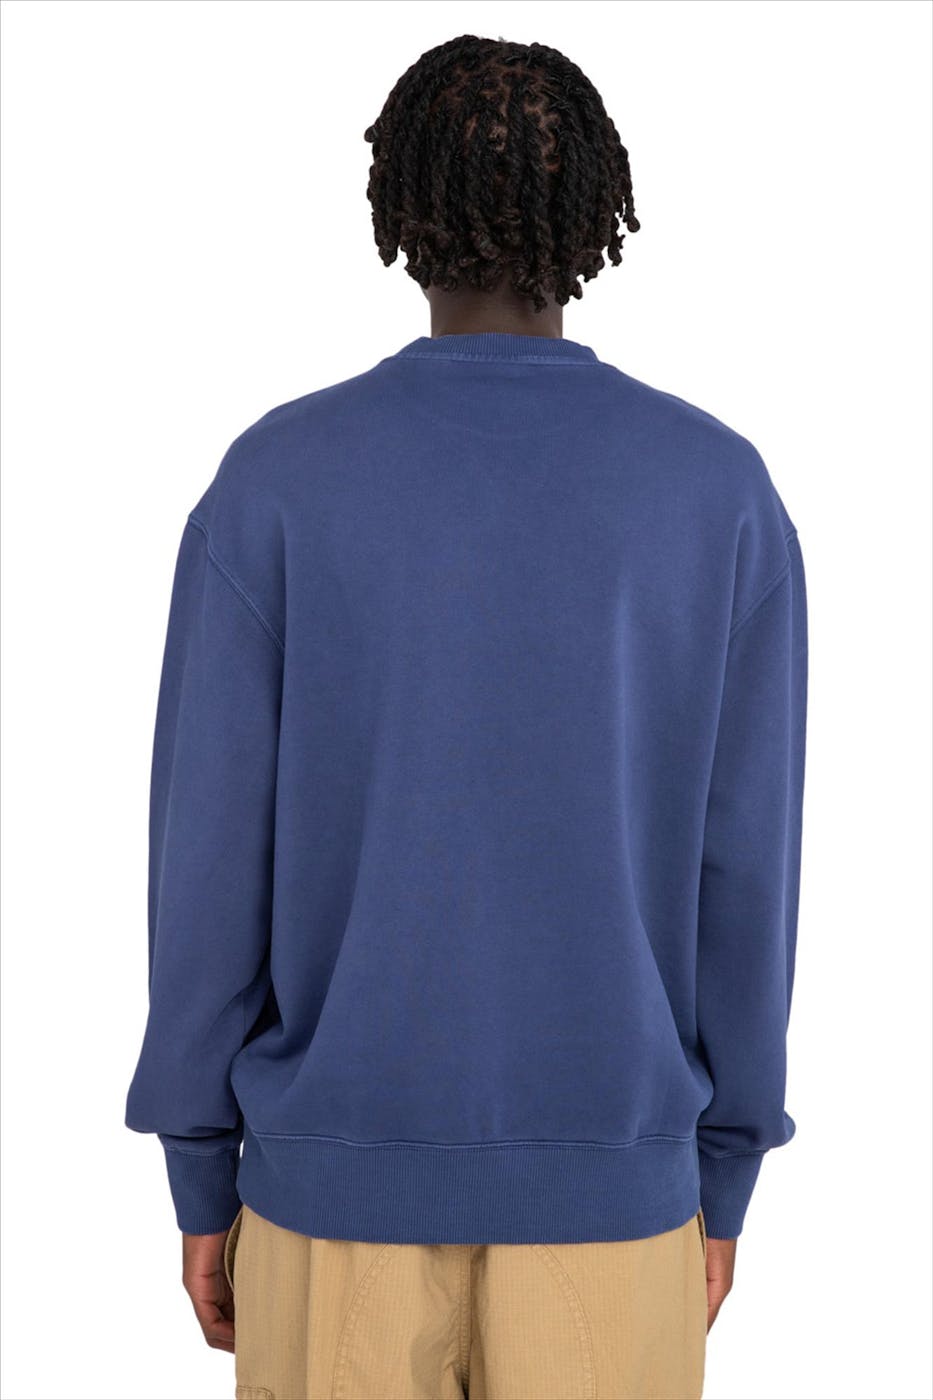 Element - Donkerblauwe Cornell 3.0 sweater